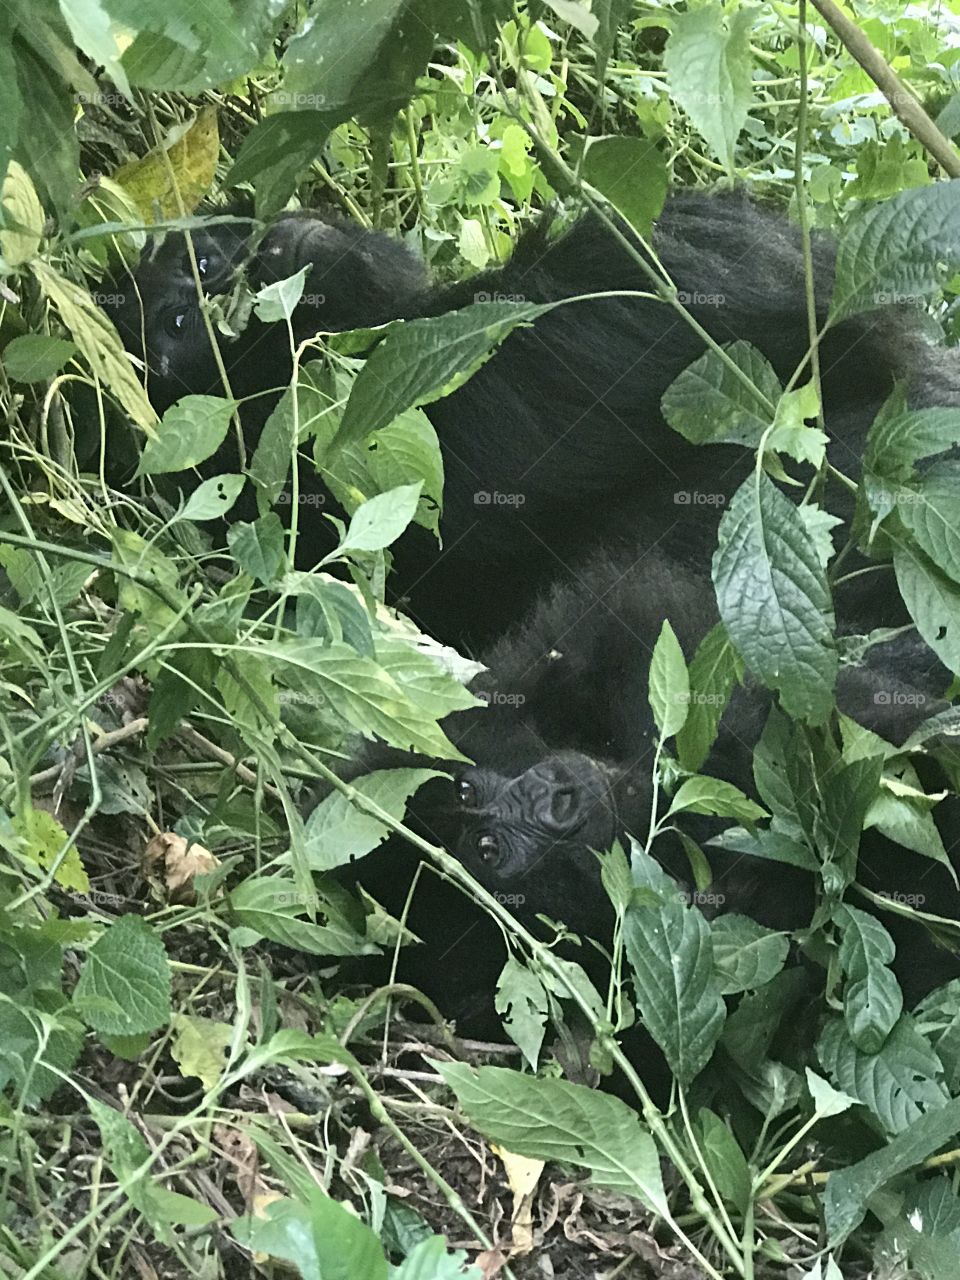 Mountain Gorillas in Biwindi, Uganda. Female gorilla with 4 month old.